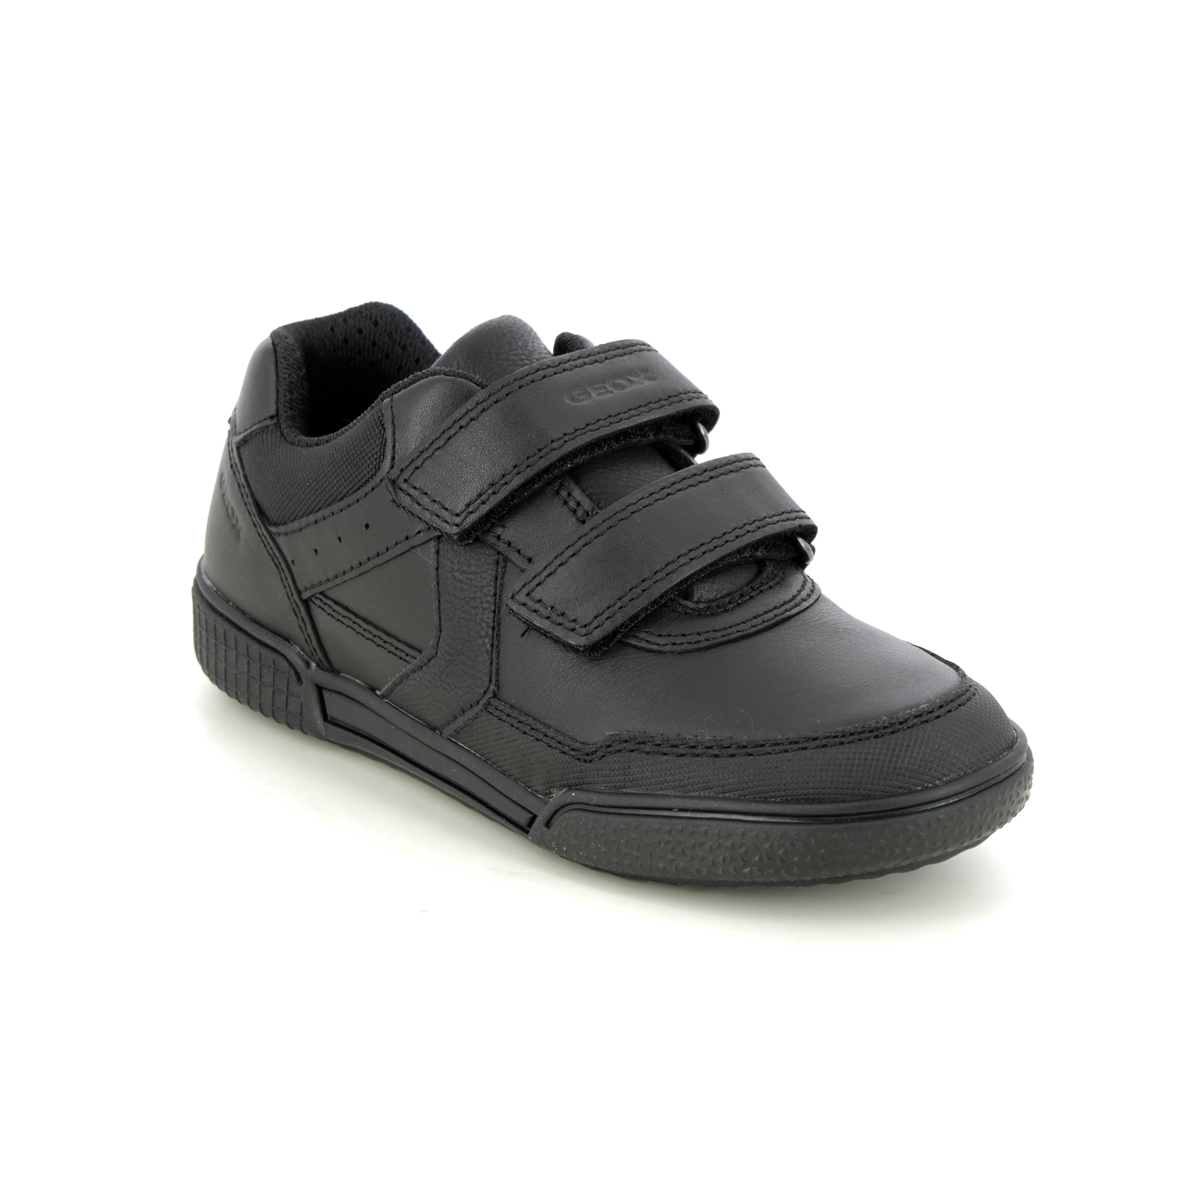 Geox - Poseido Boy 2V (Black Leather) J02Bca-C9999 In Size 27 In Plain Black Leather For School For kids